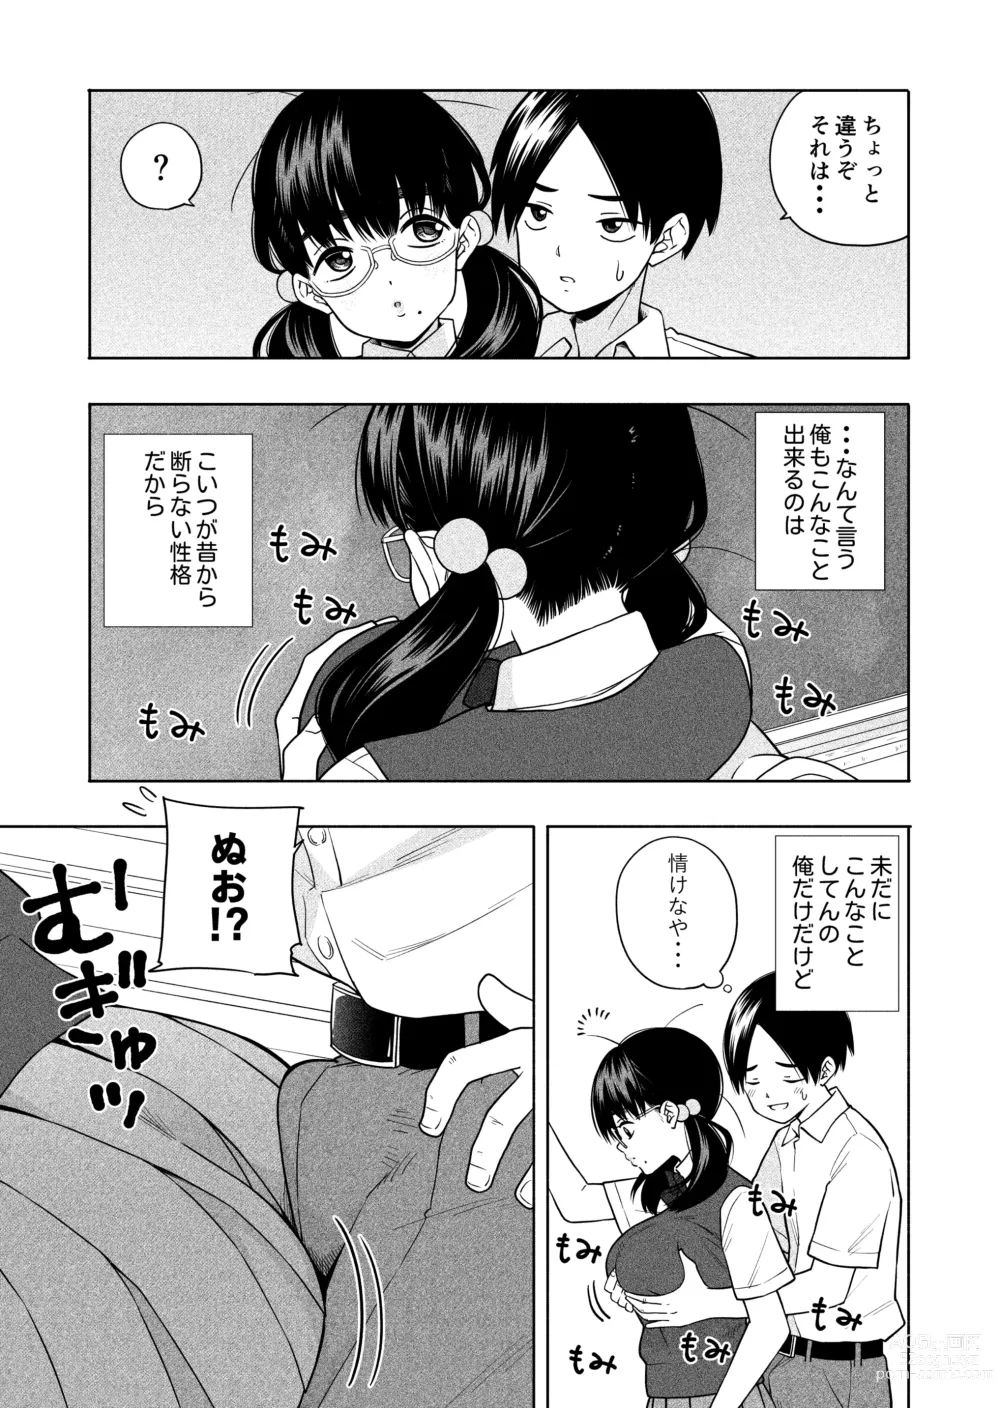 Page 7 of doujinshi Hoshikute, Motomete.